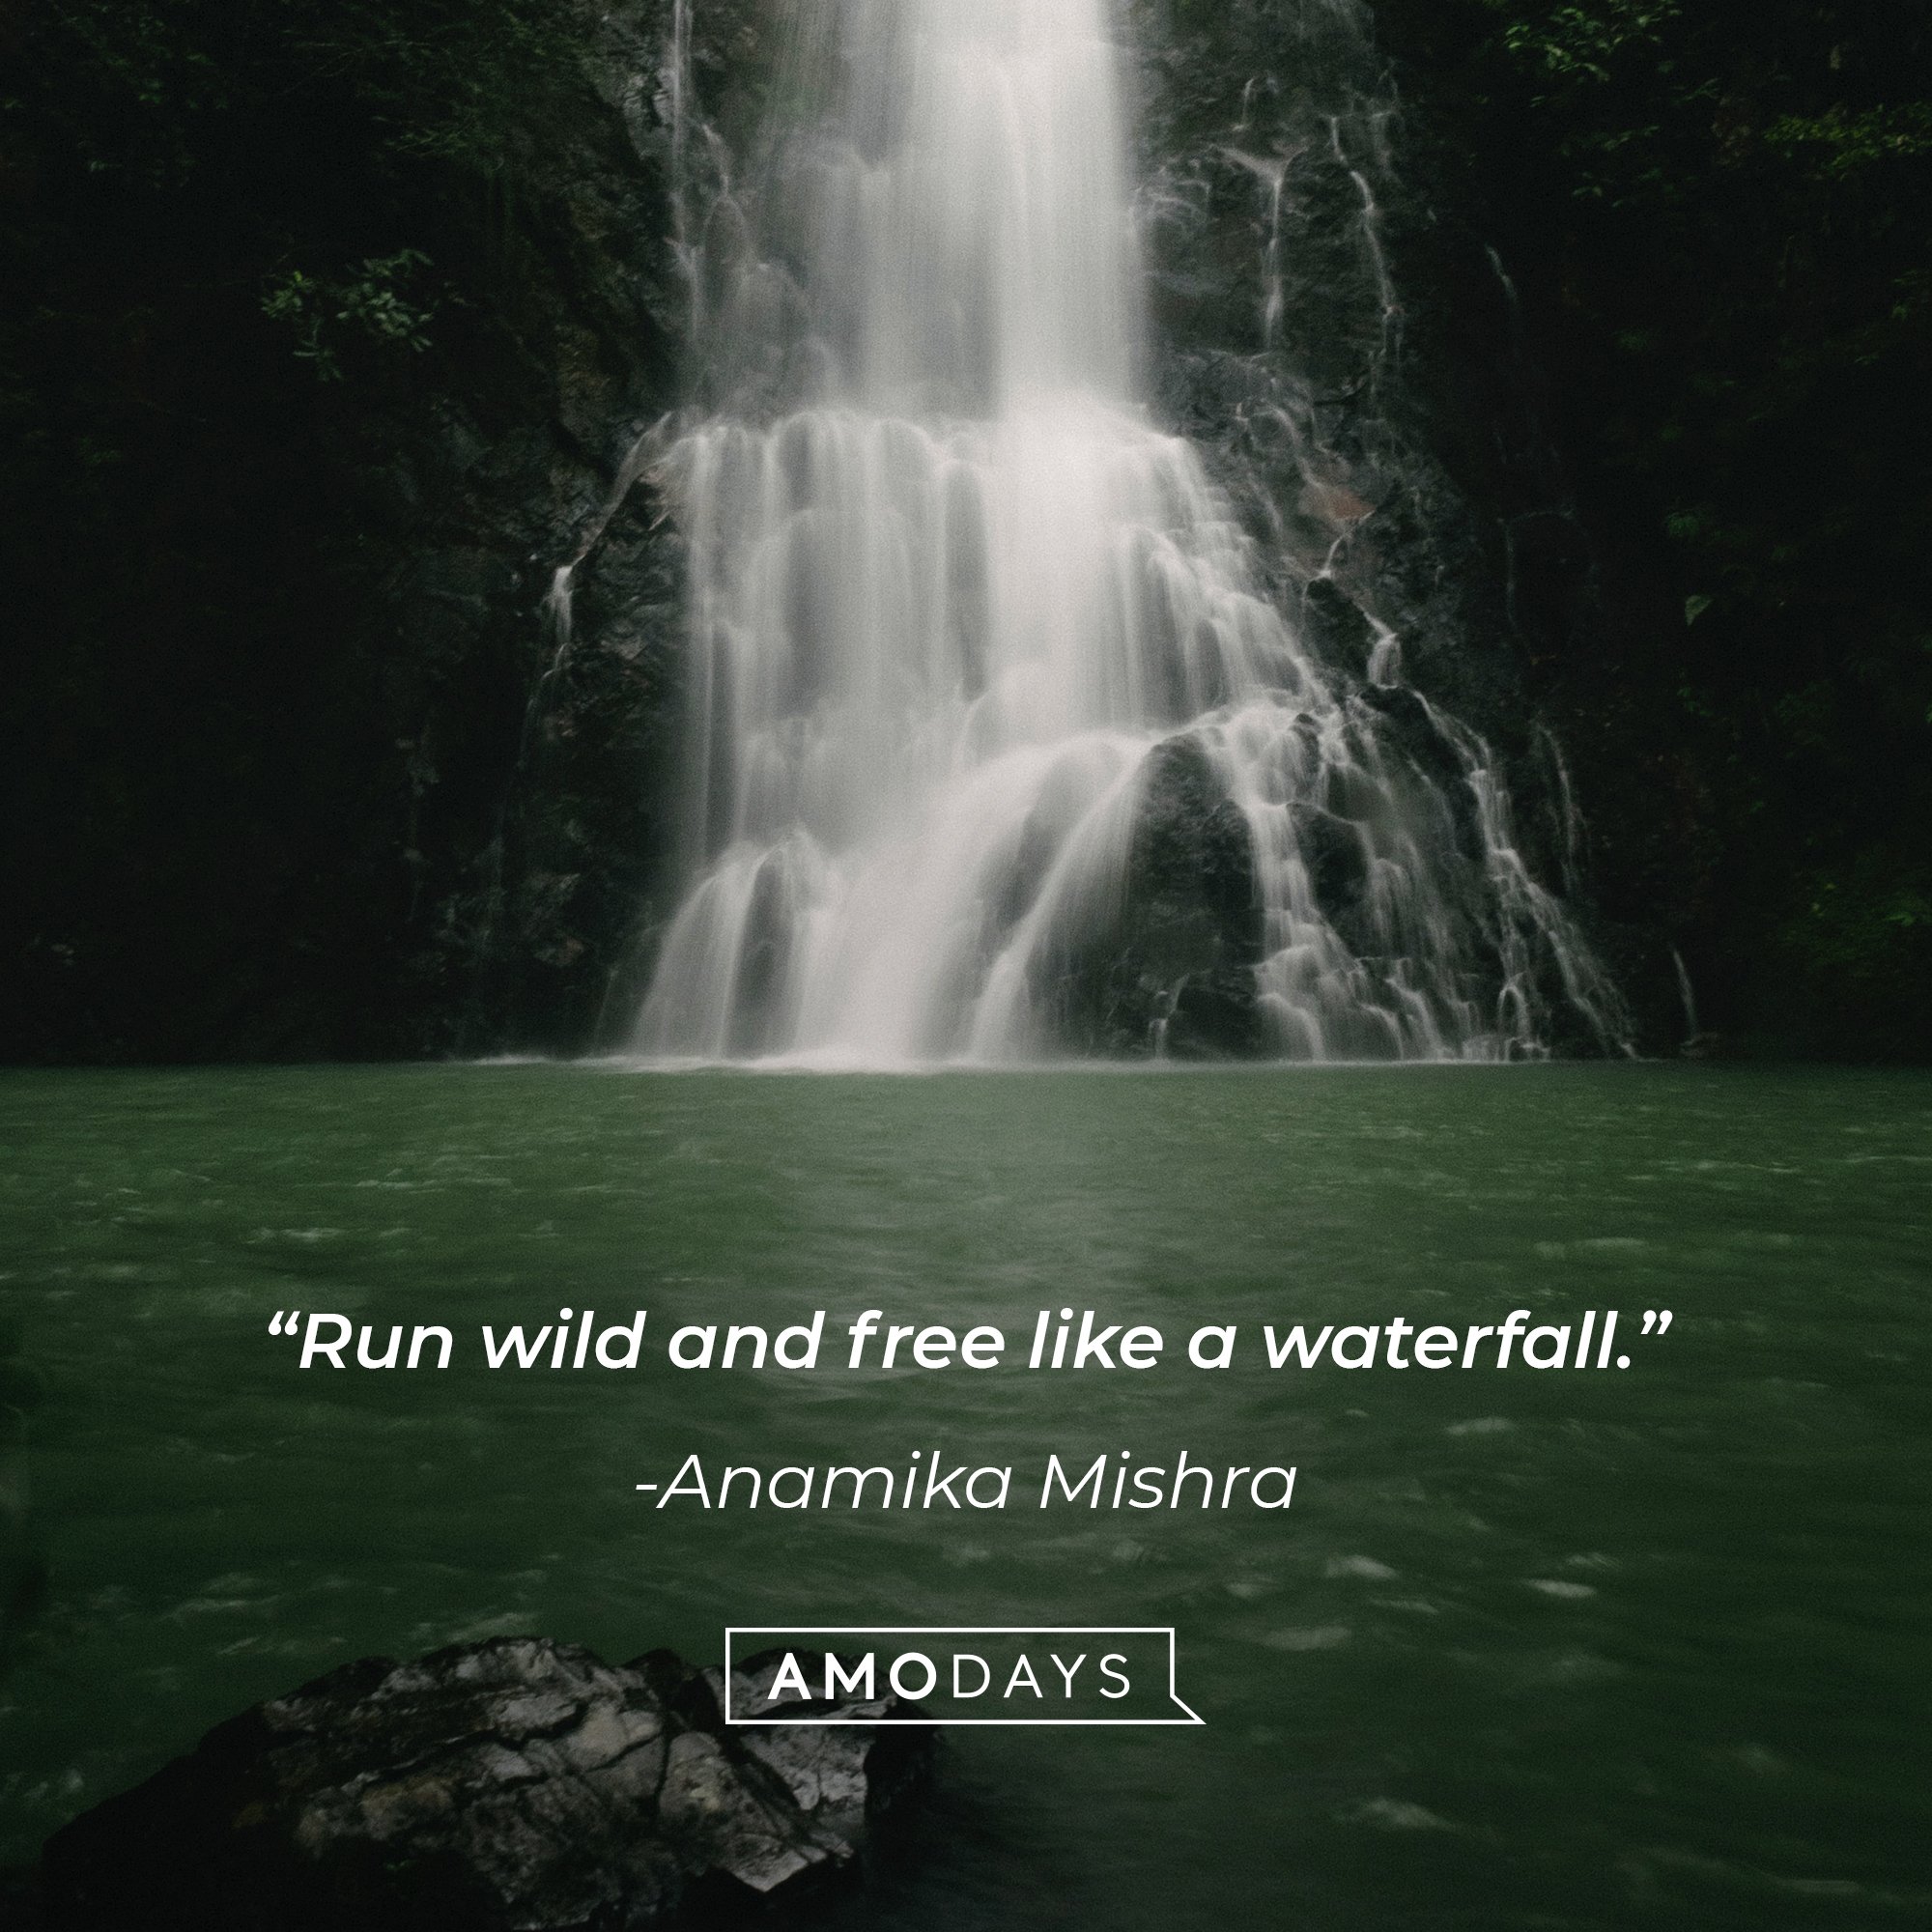 Anamika Mishra’s quote: “Run wild and free like a waterfall.” | Image: AmoDays